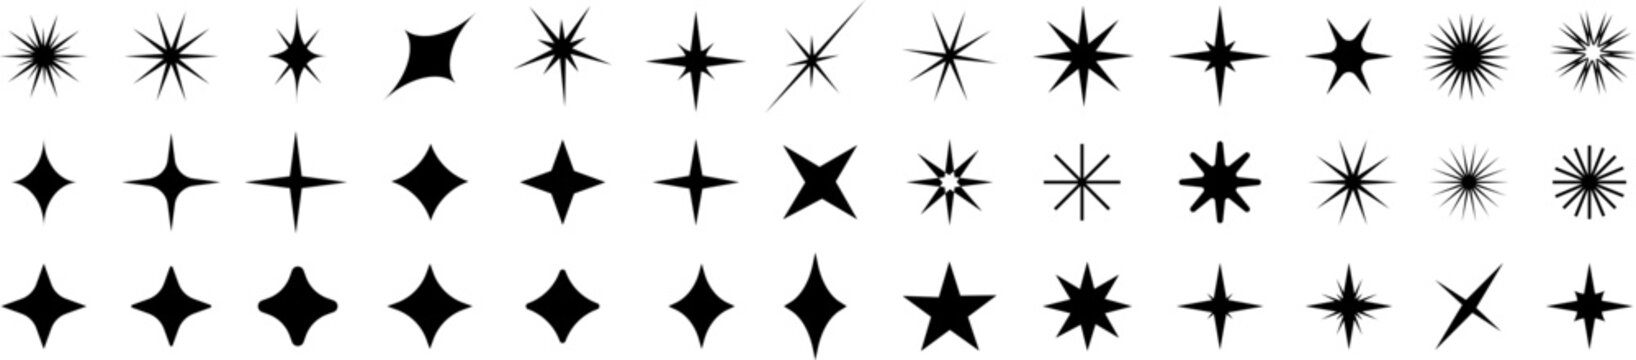 Set of sparkles star icons. Christmas black star icon. Modern simple stars collection. Bright firework .Light icon set. Flash,shine sparkle icon,glare,blink star.